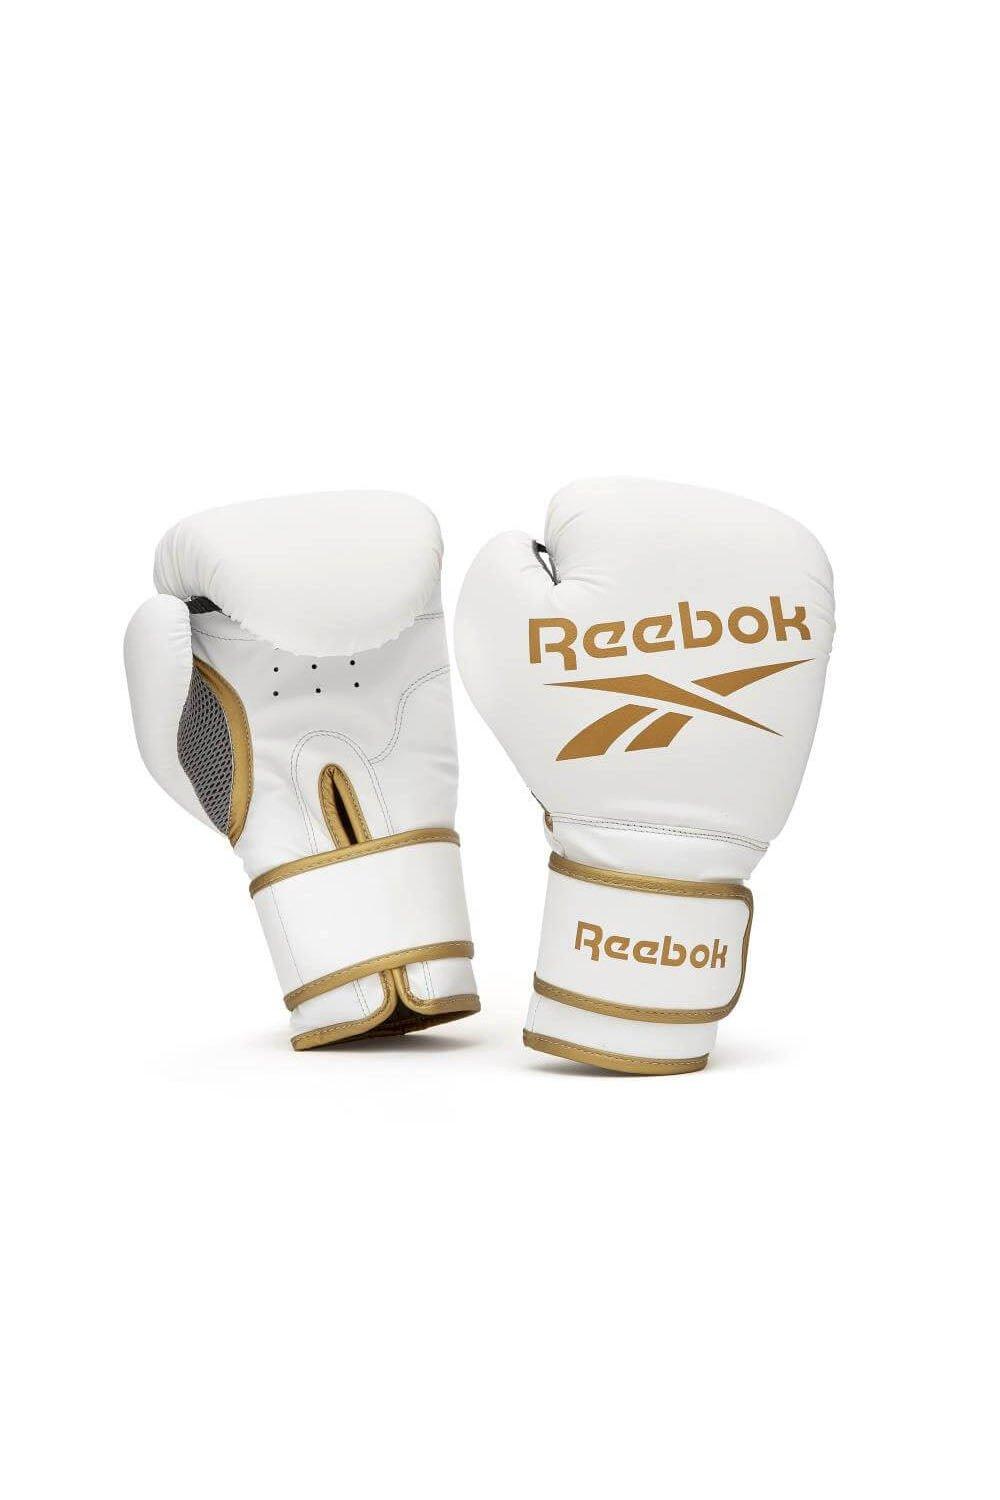 Reebok Boxing Gloves - Gold/White|Size: 16oz|white